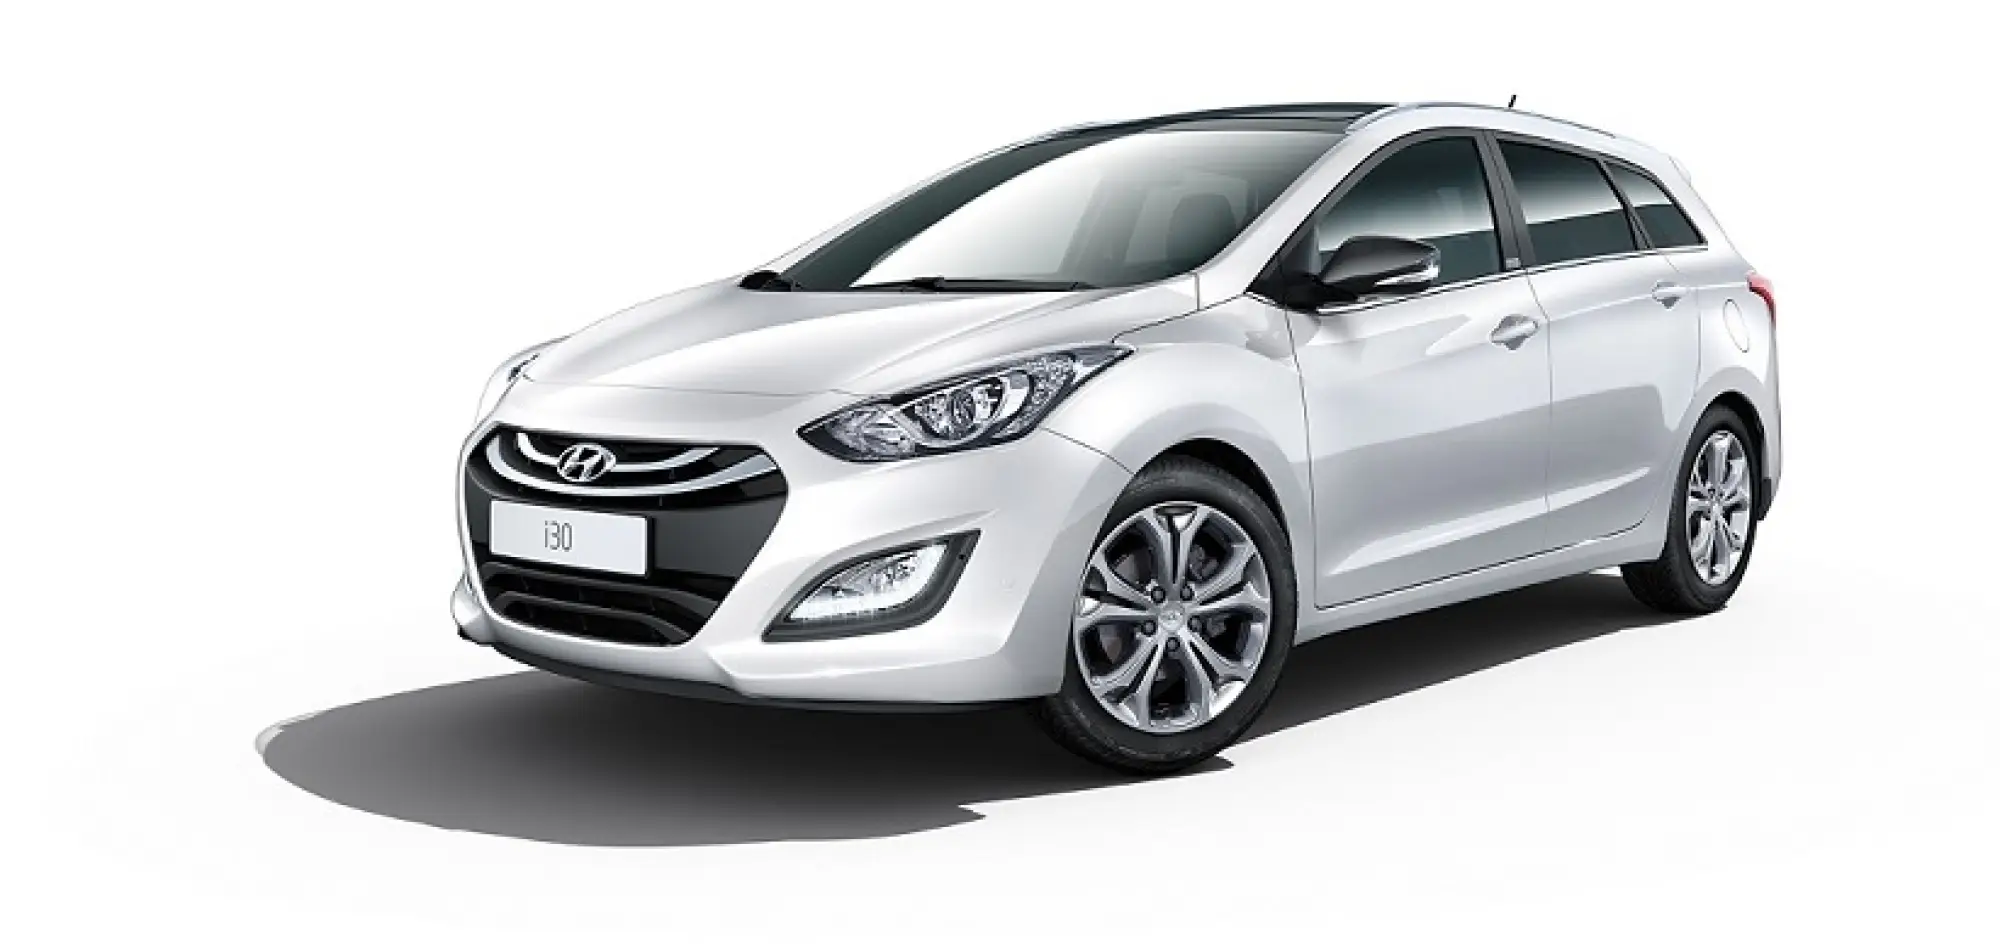 Hyundai Limited Edition Go Brasil - 6